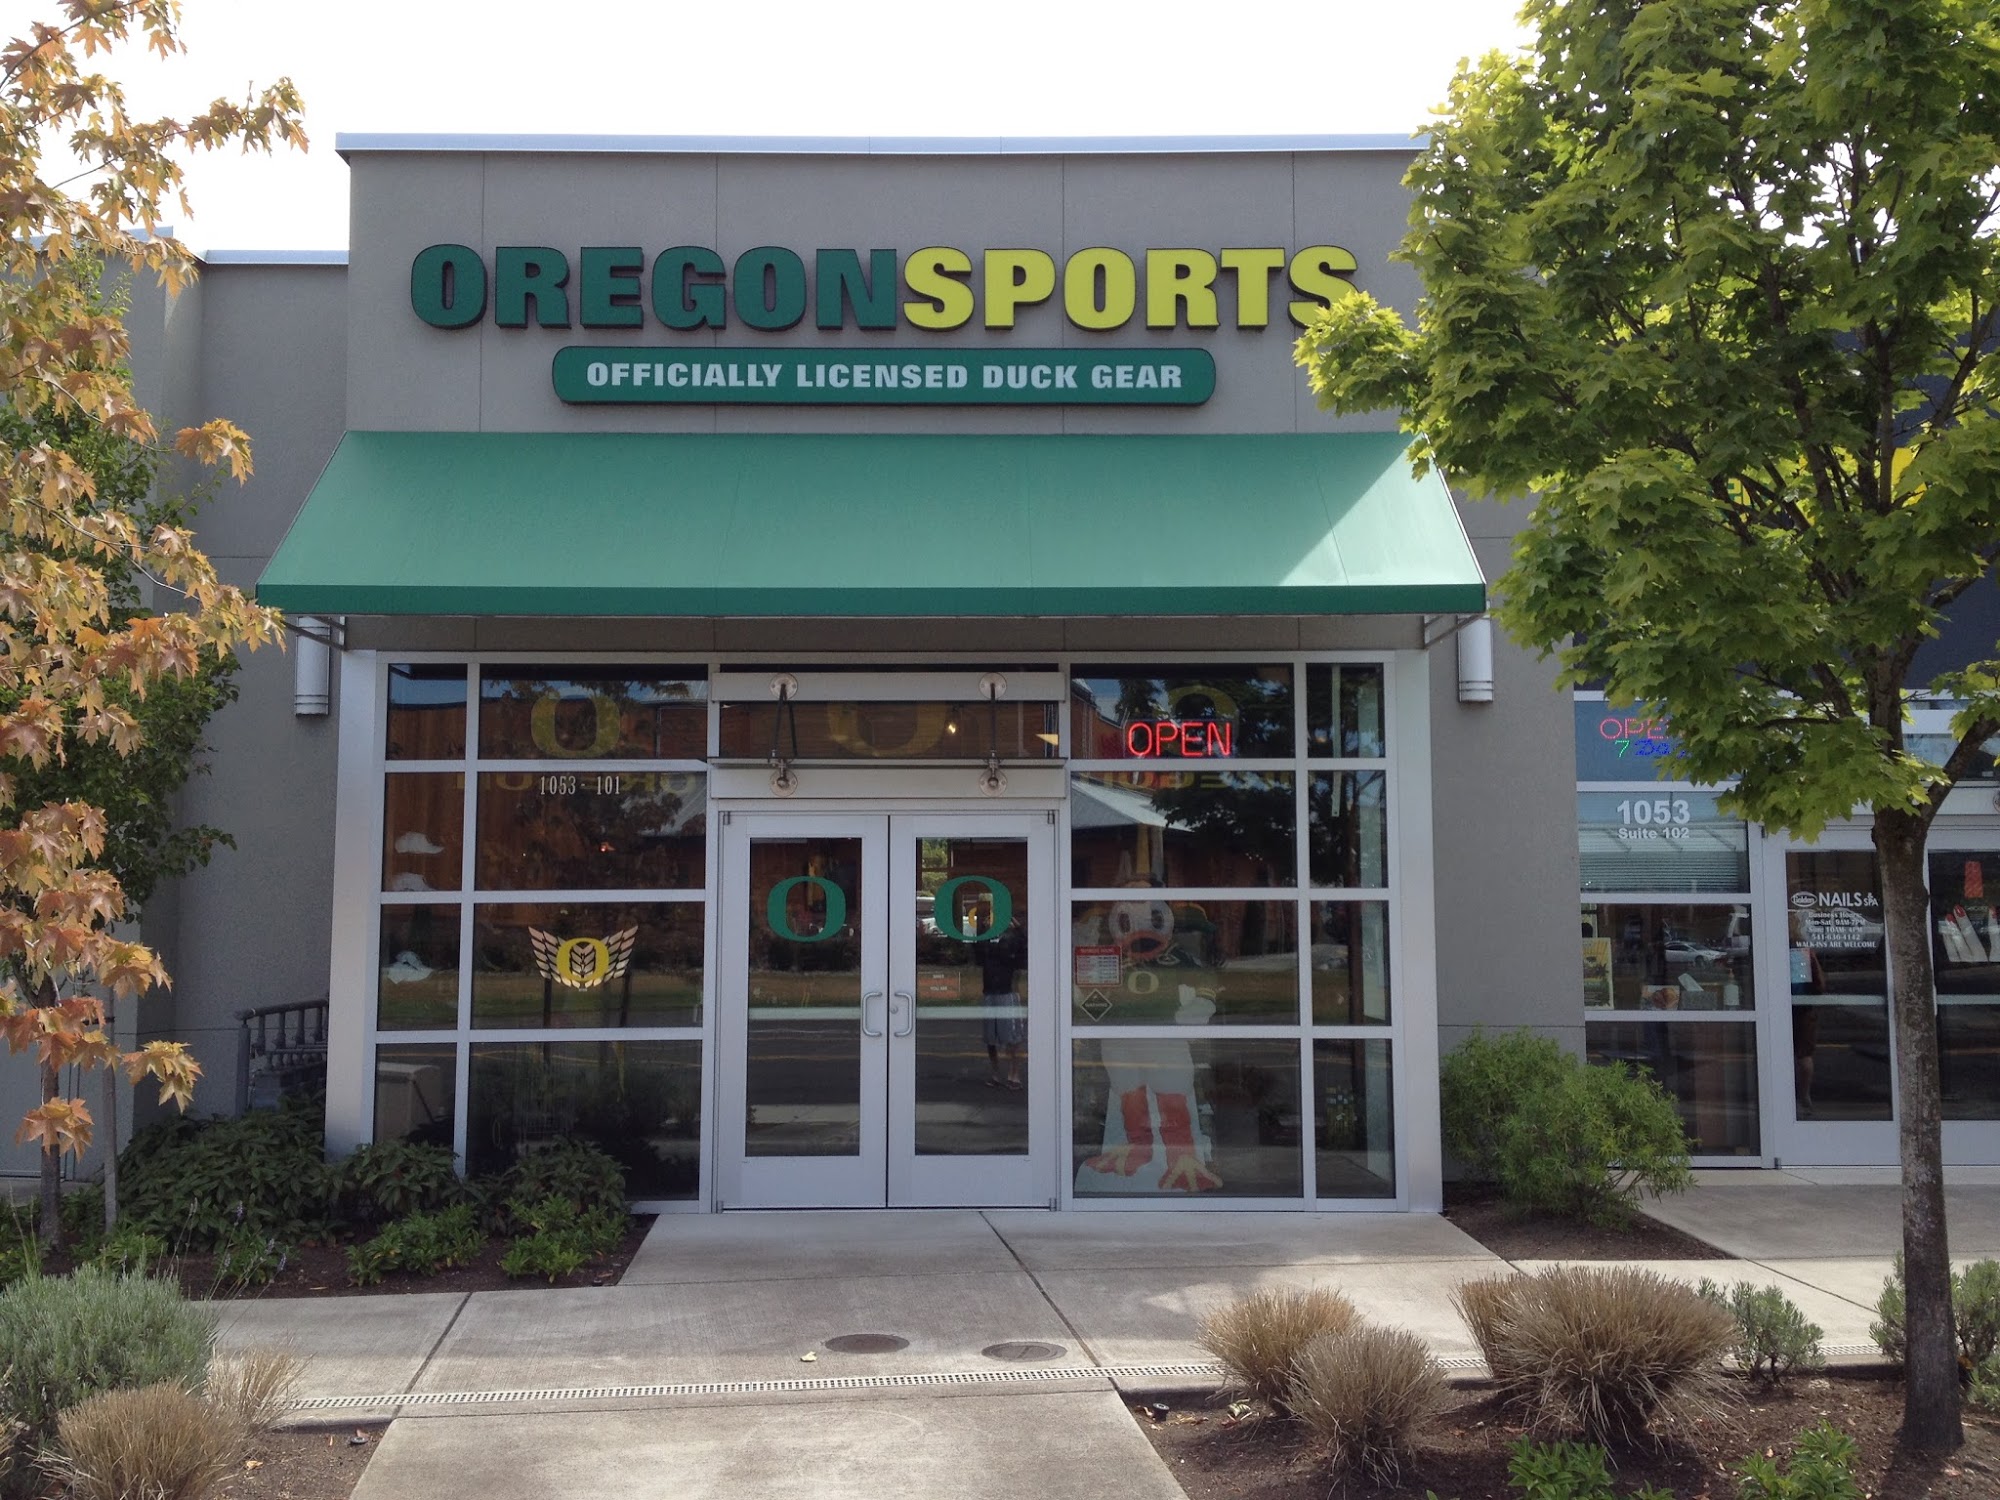 Oregon Sports